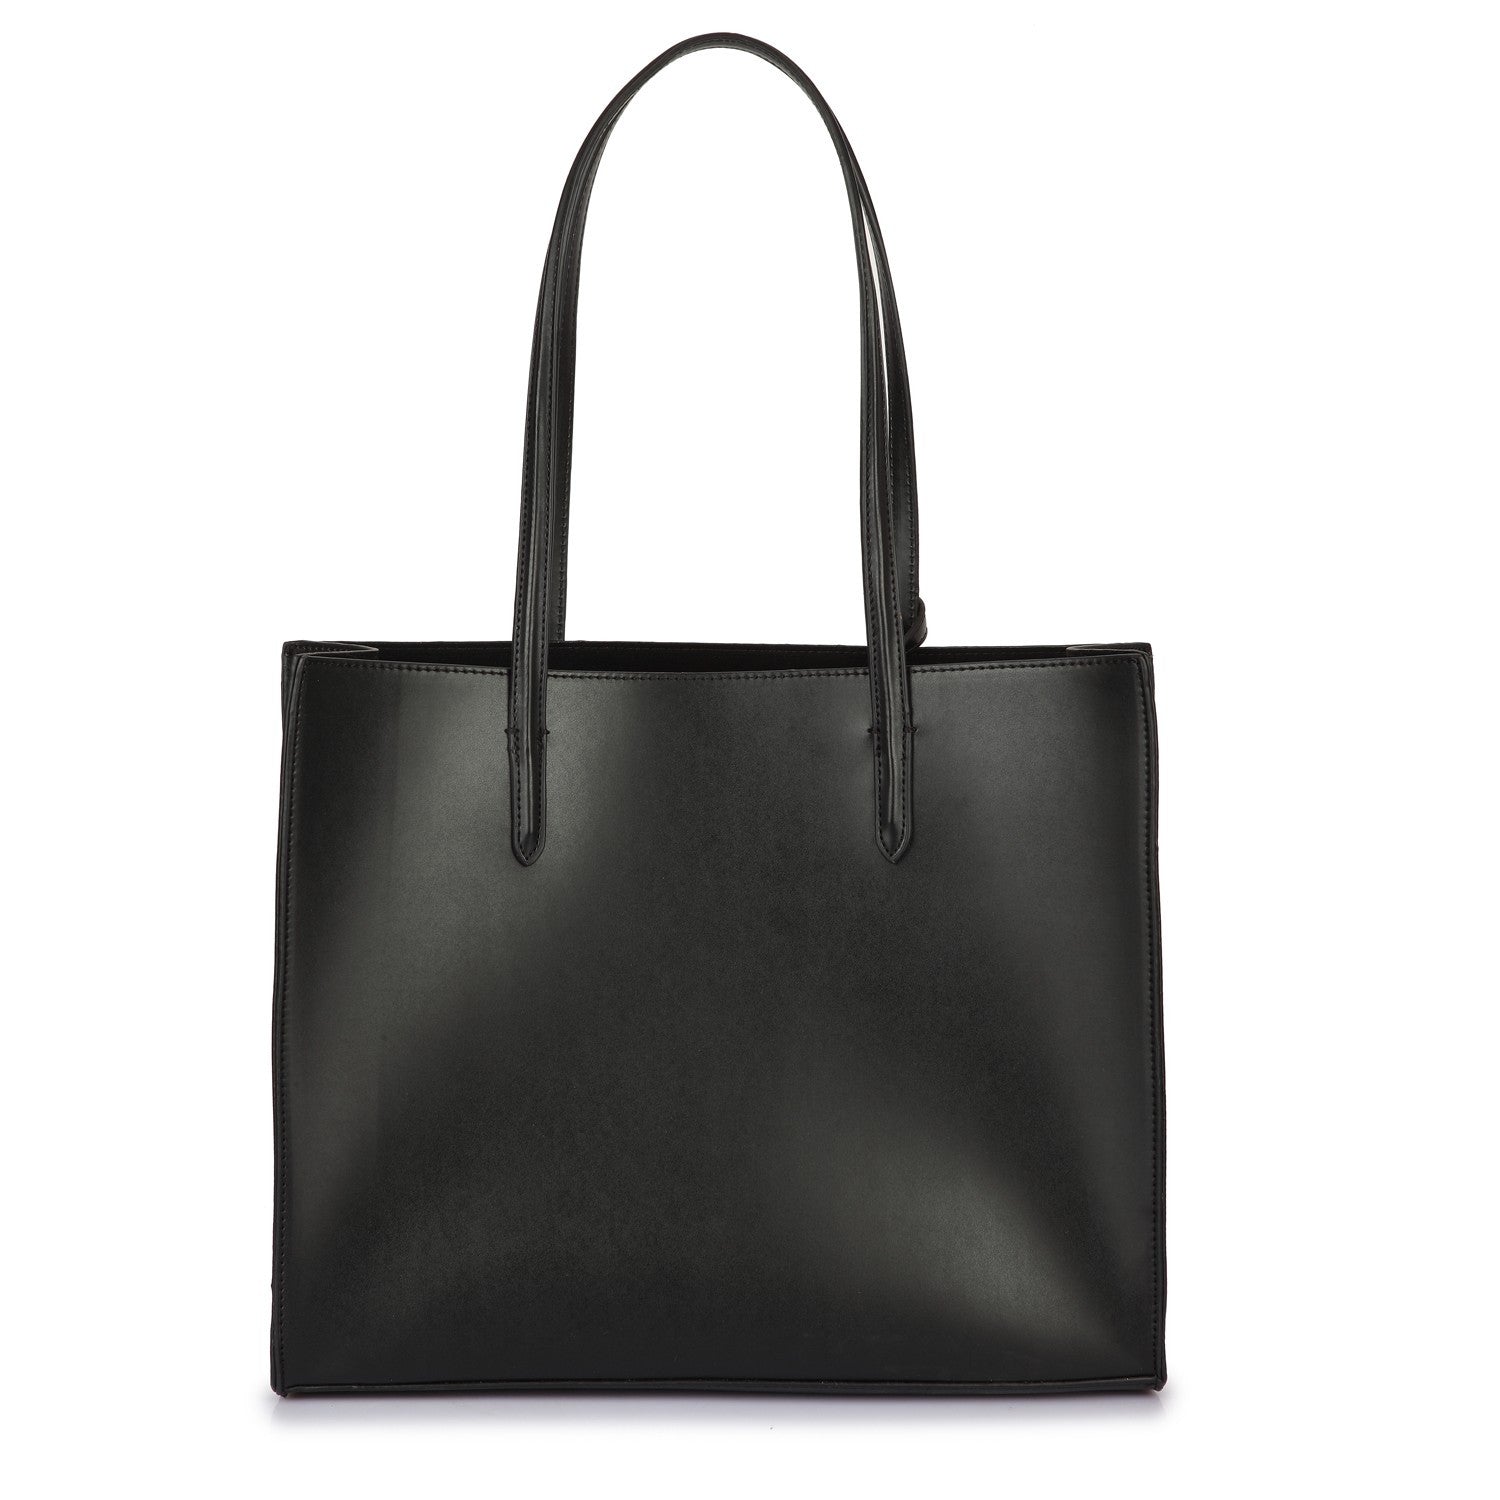 Alexander Black Handbags - Bag Envy